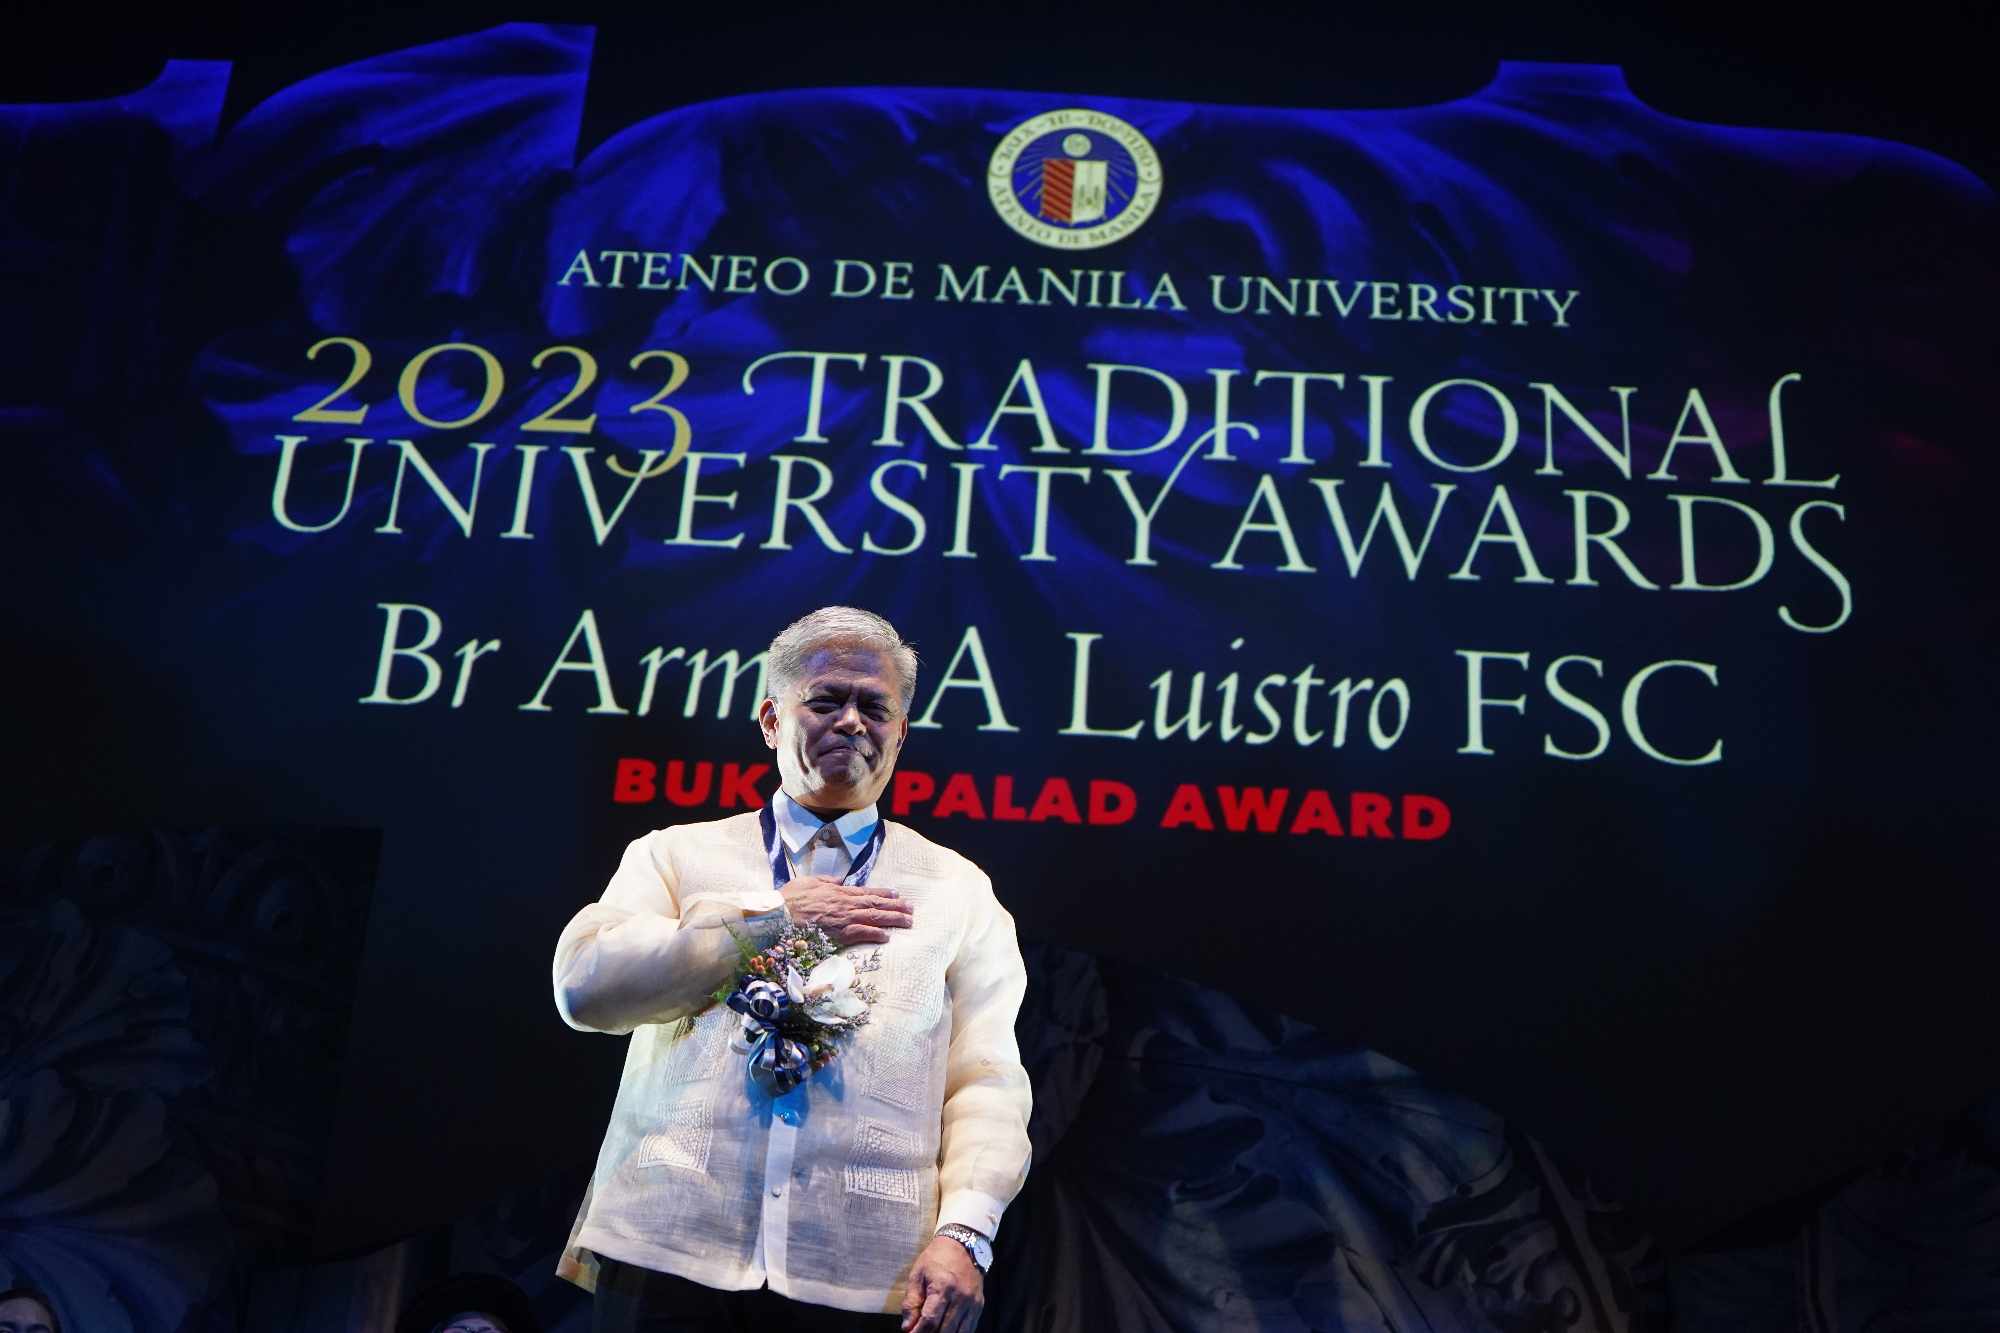 The 2023 Bukas Palad Award is conferred on Br Armin Luistro, FSC